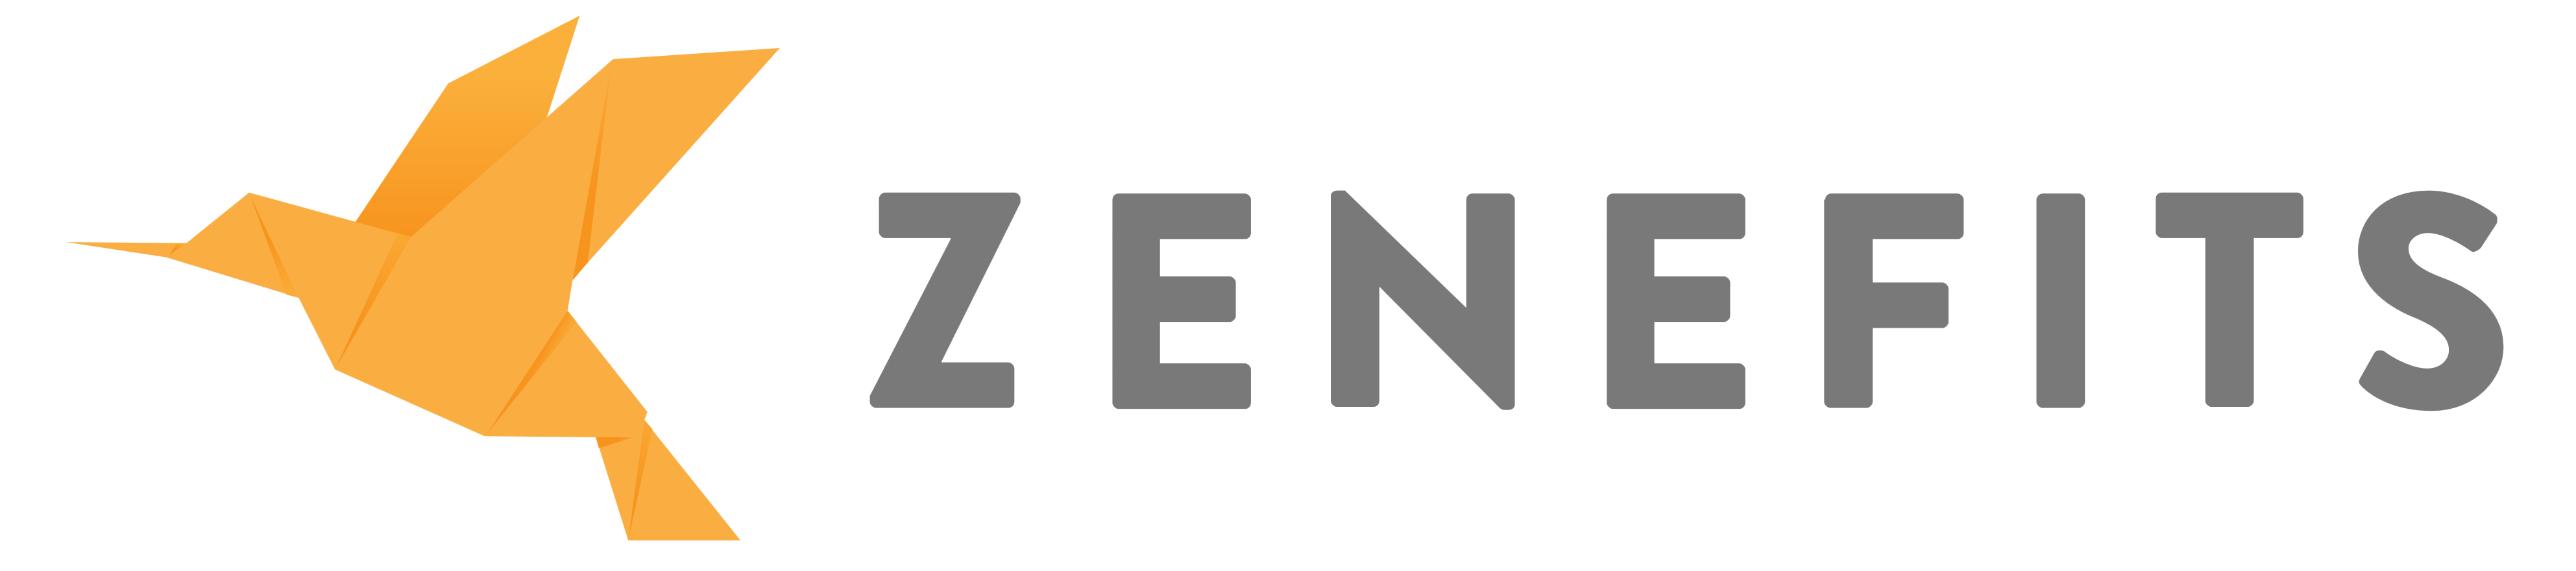 Zenefits Logo - Zenefits Moves to Shed Scandals, Transform Image